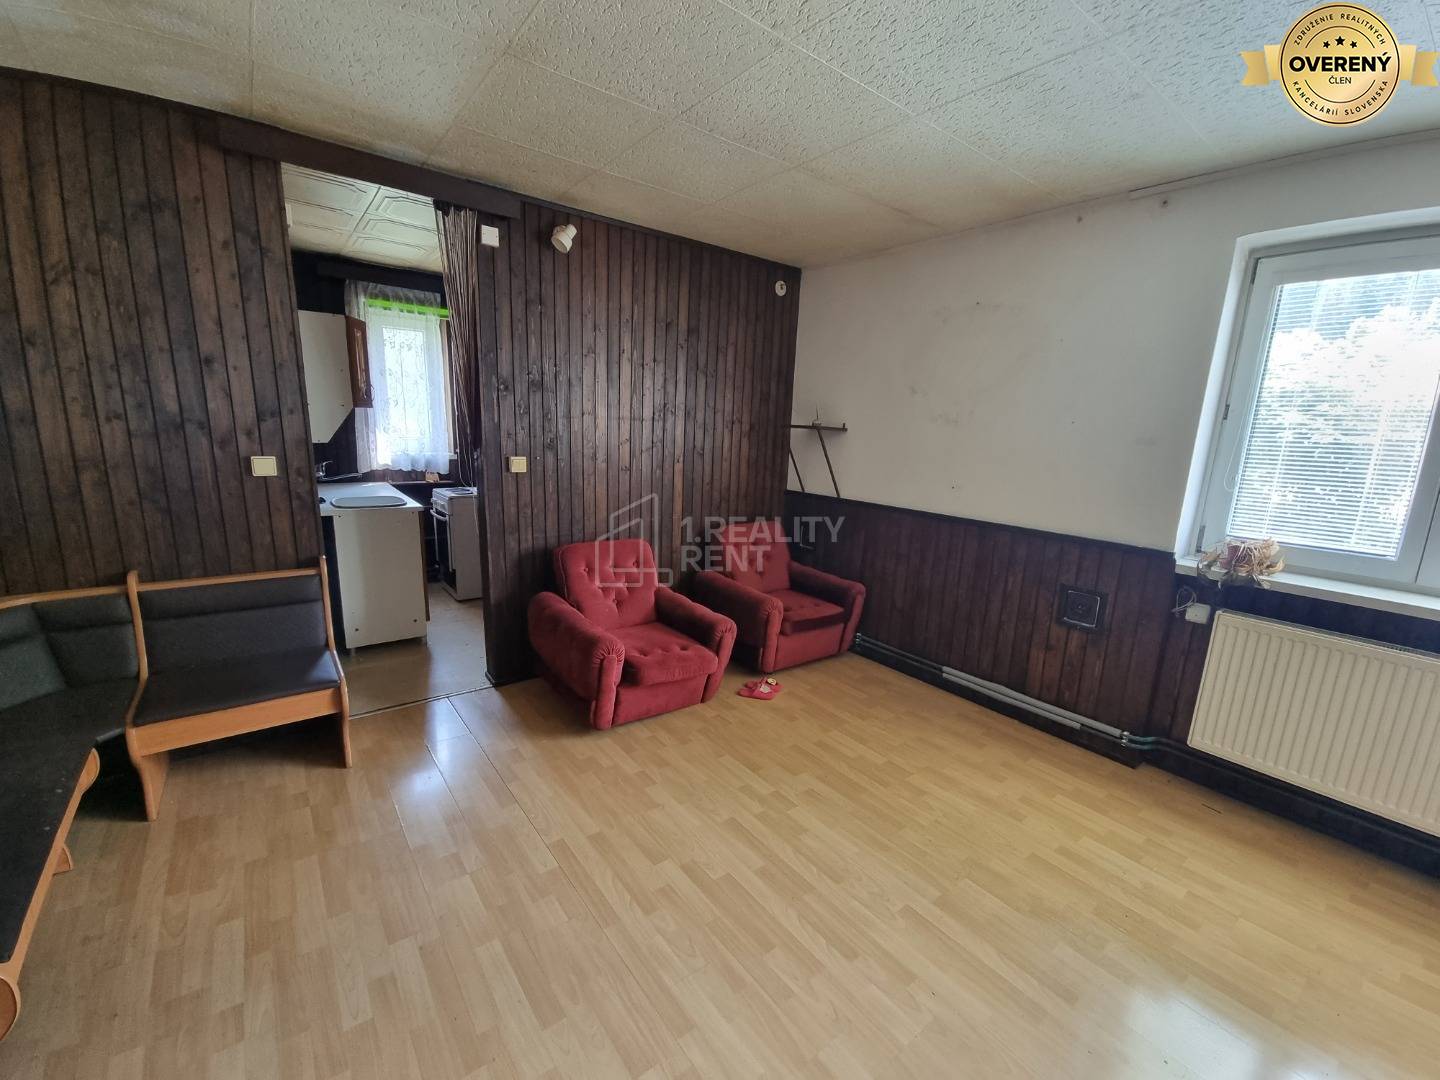 Two bedroom apartment, Centrum, Sale, Čadca, Slovakia